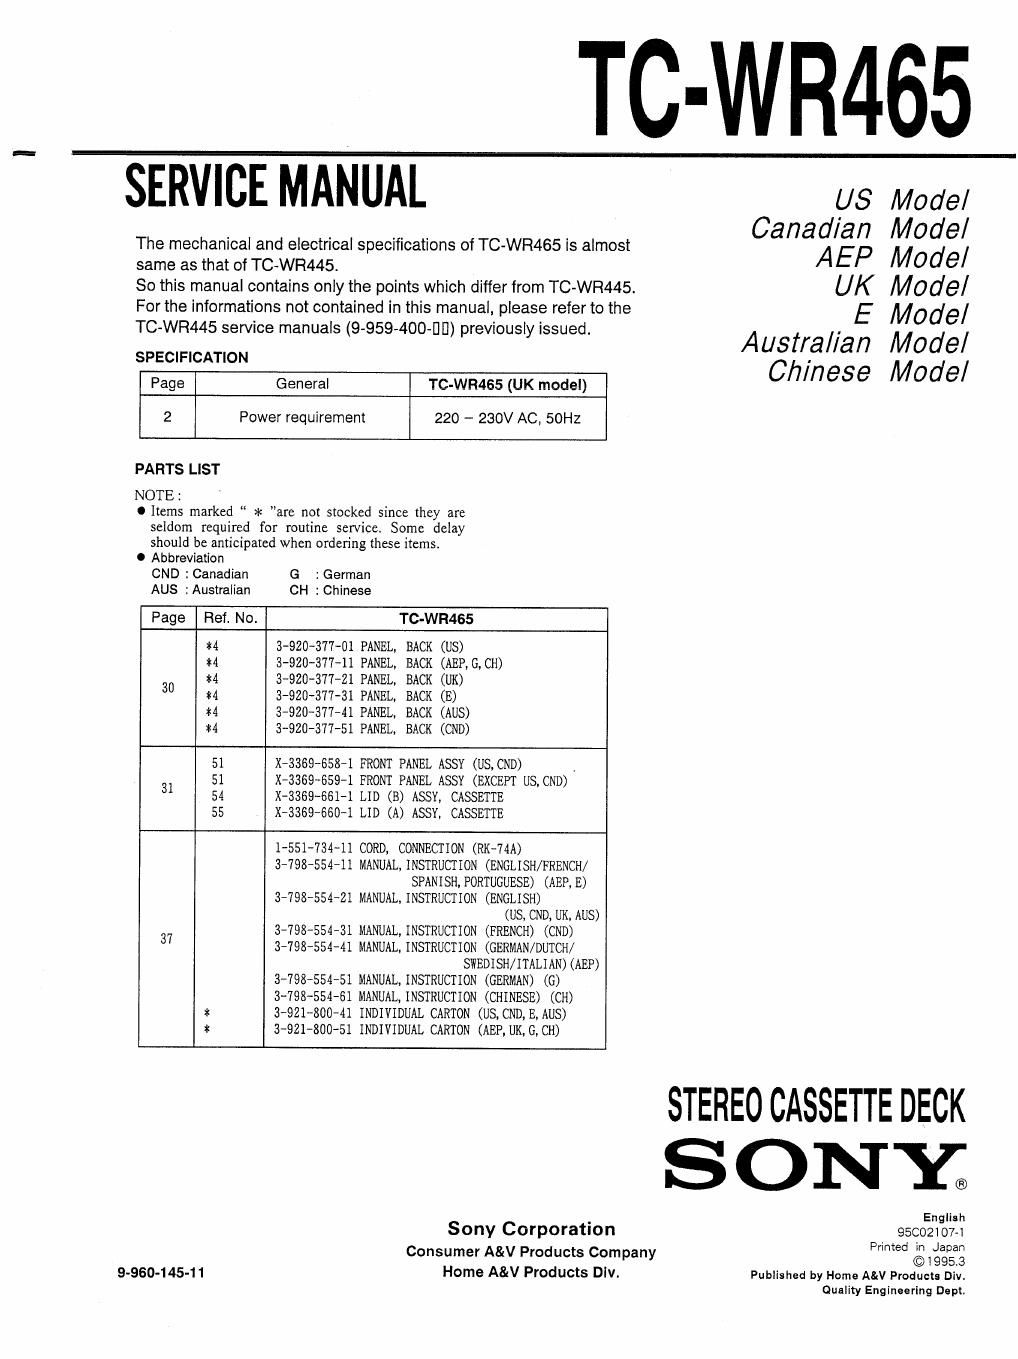 sony tc wr 465 service manual